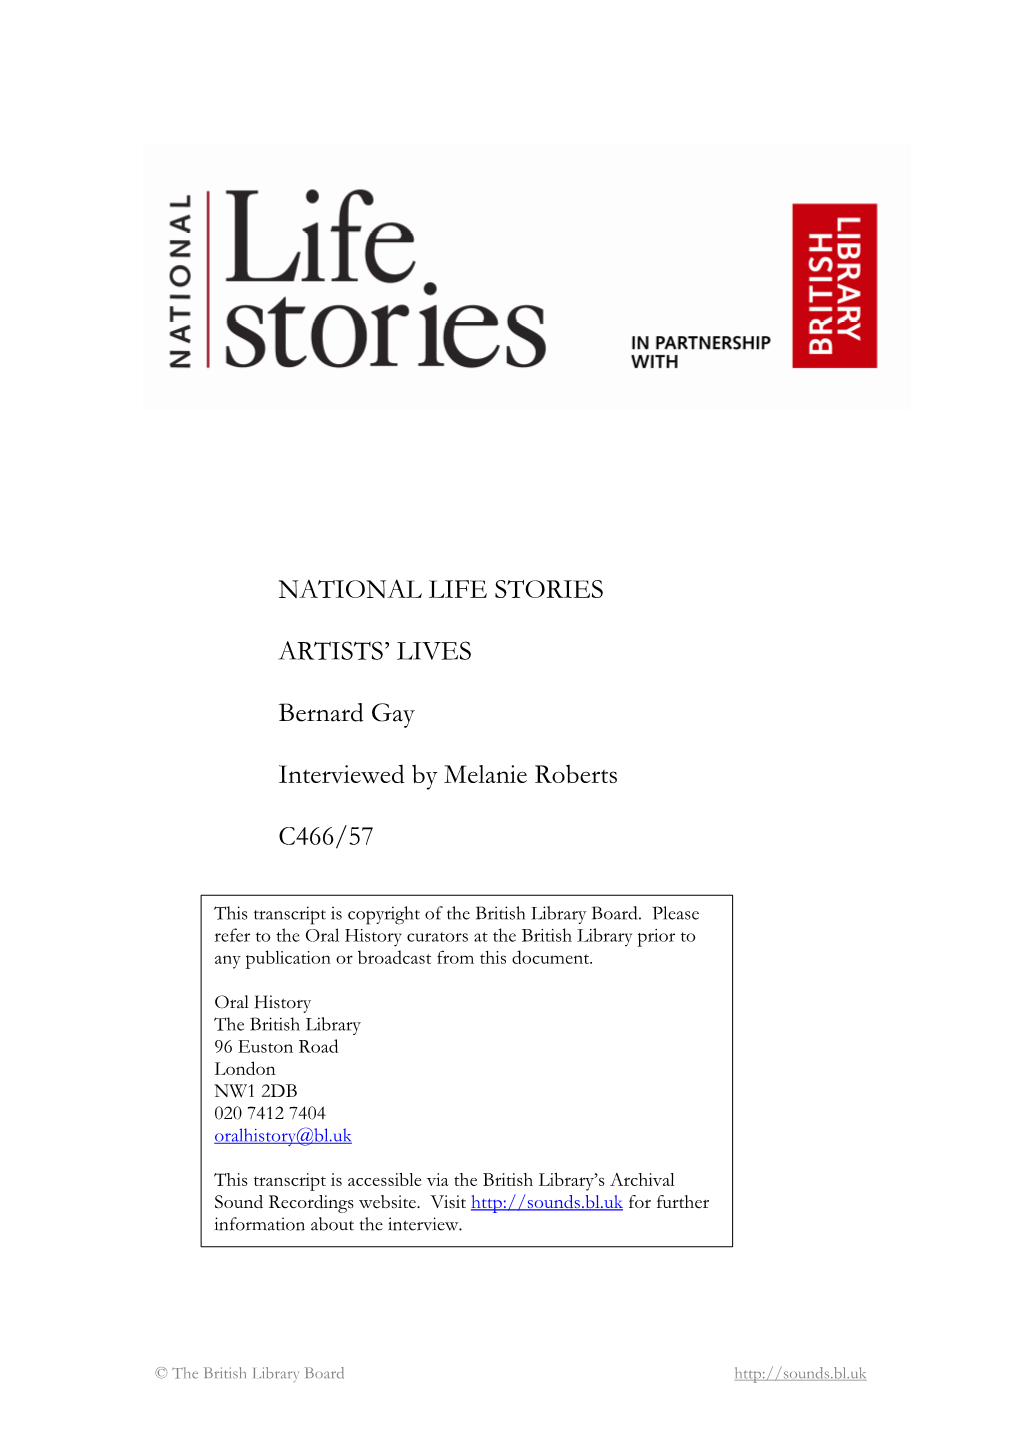 NATIONAL LIFE STORIES ARTISTS' LIVES Bernard Gay Interviewed By